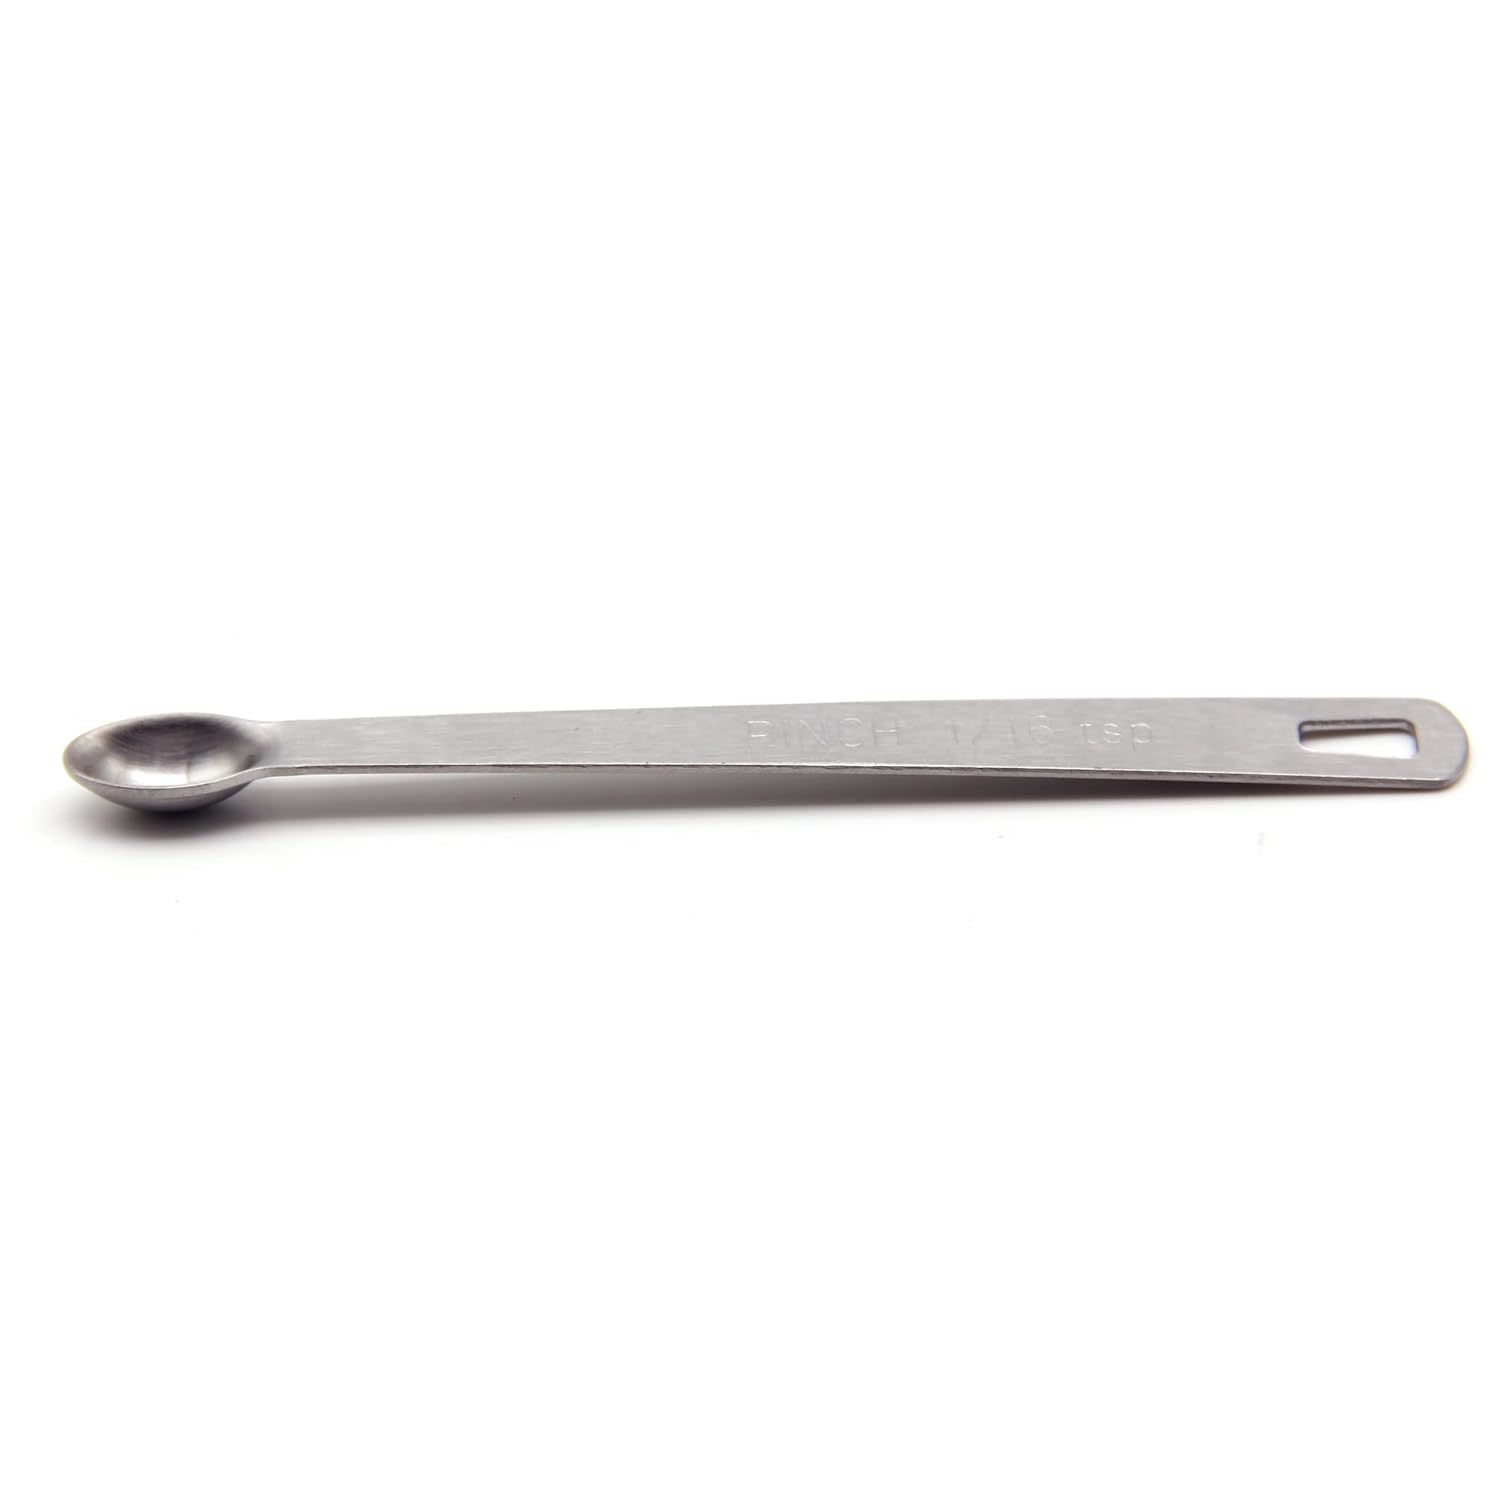 3 Piece Stainless Steel Measuring Spoon Set, 1/32 tsp, 1/16 tsp, 1/8 tsp